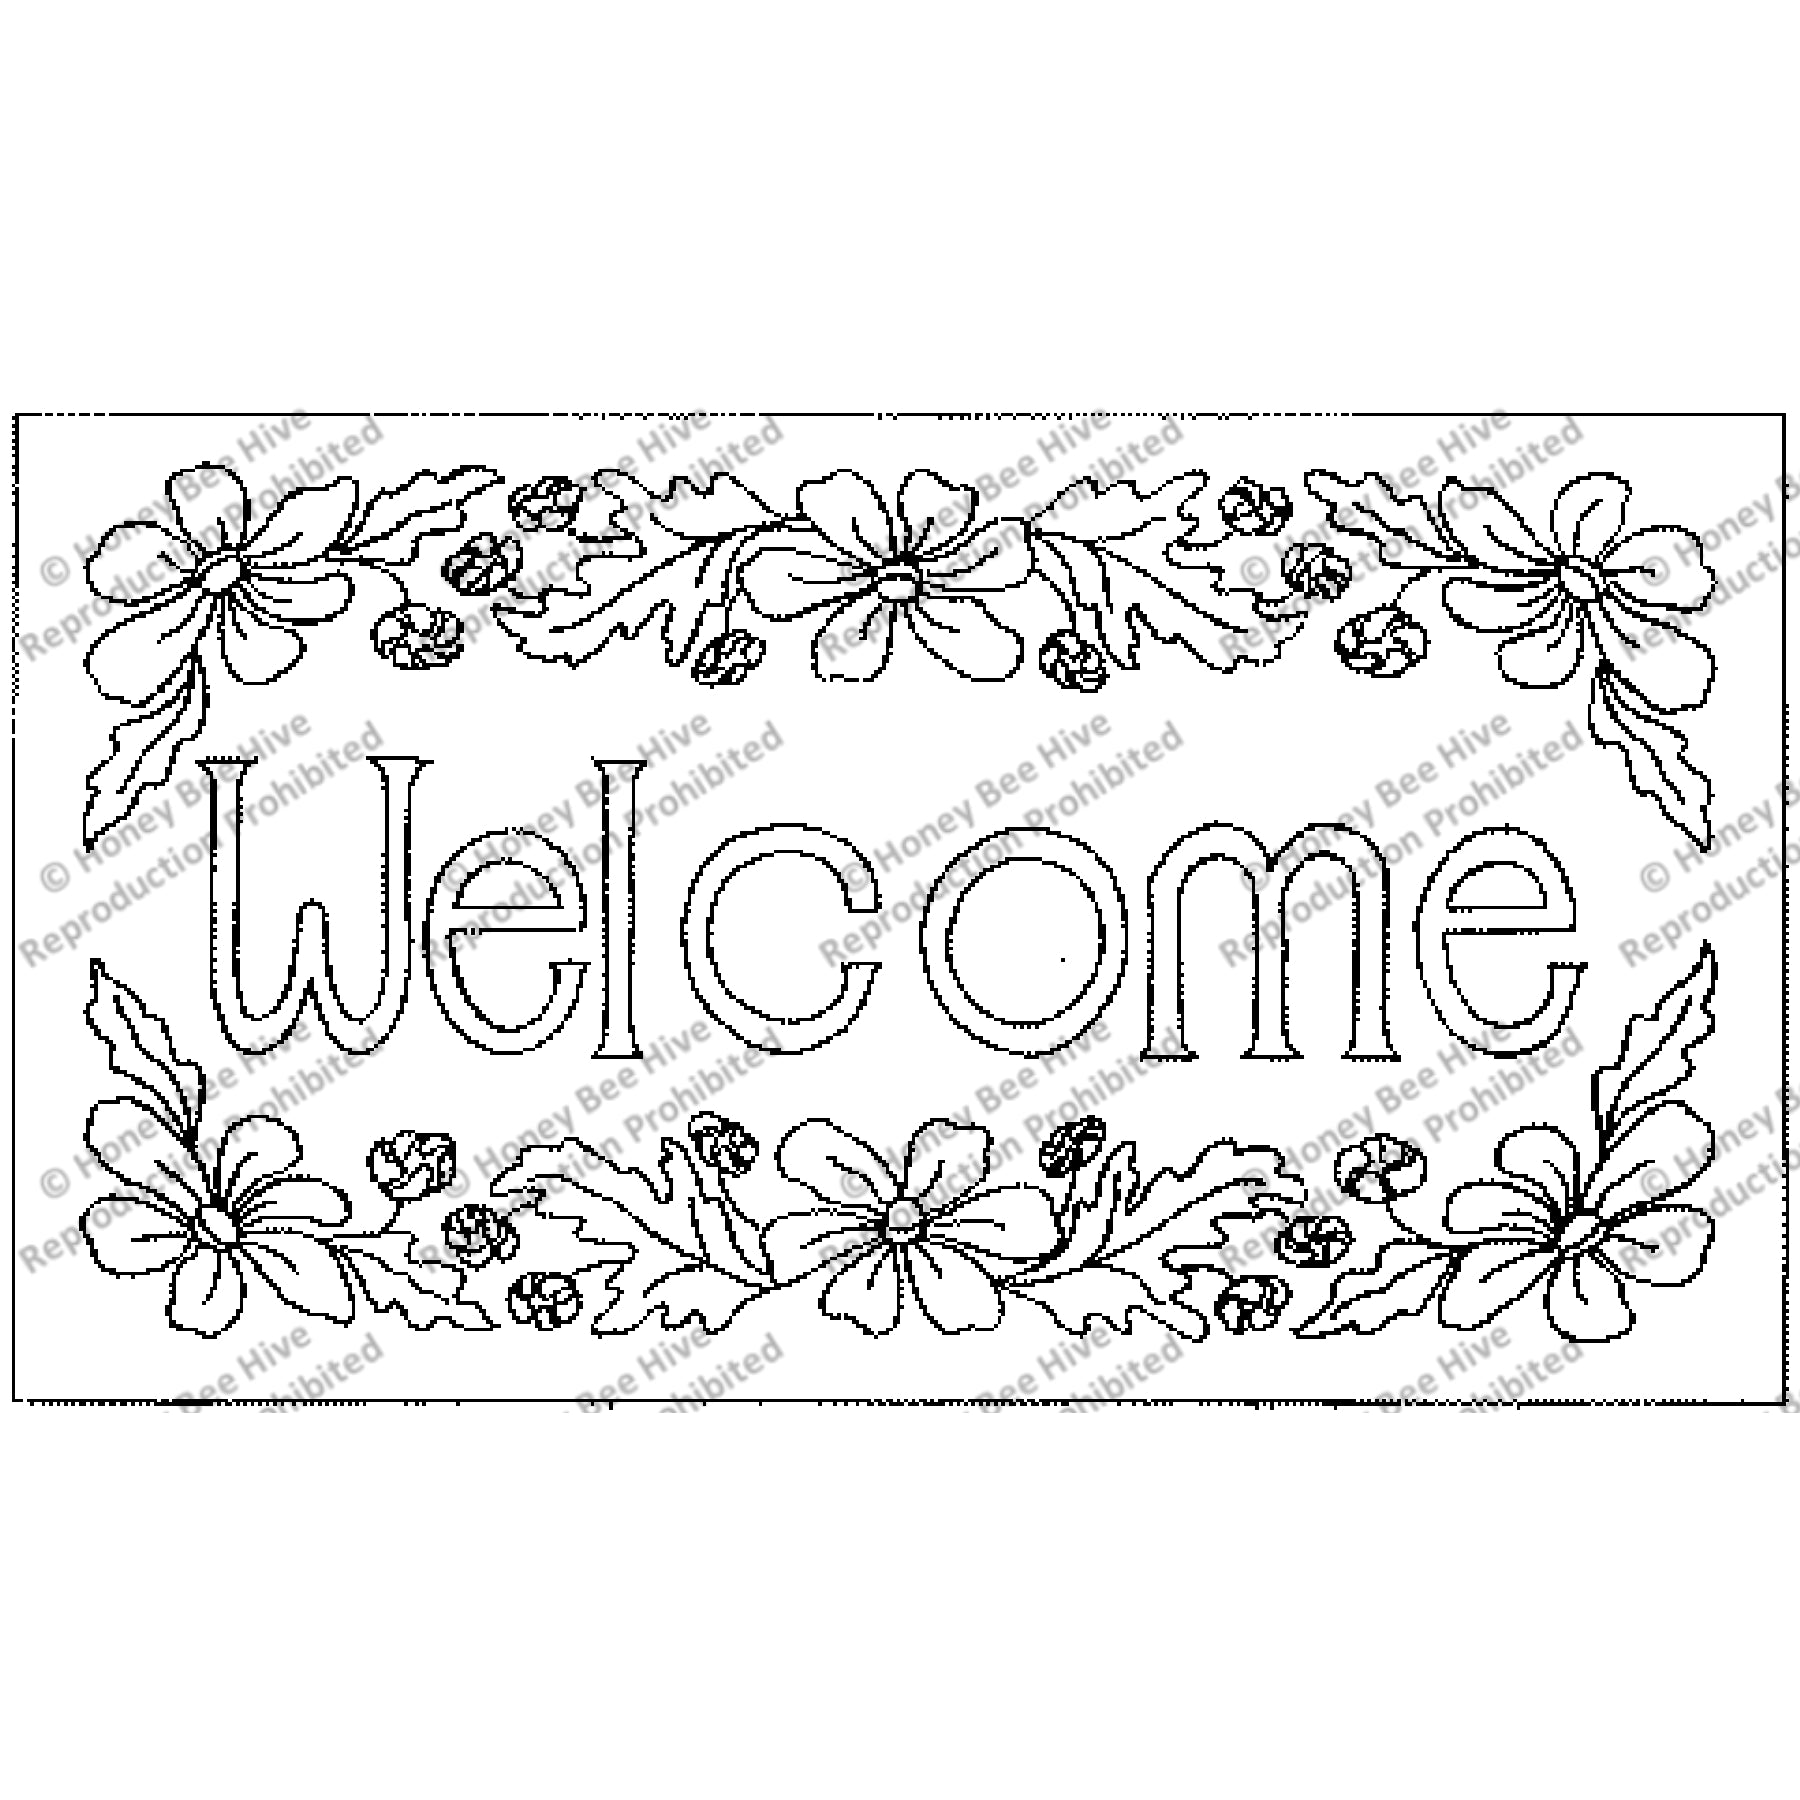 Welcome-Open Flower, rug hooking pattern